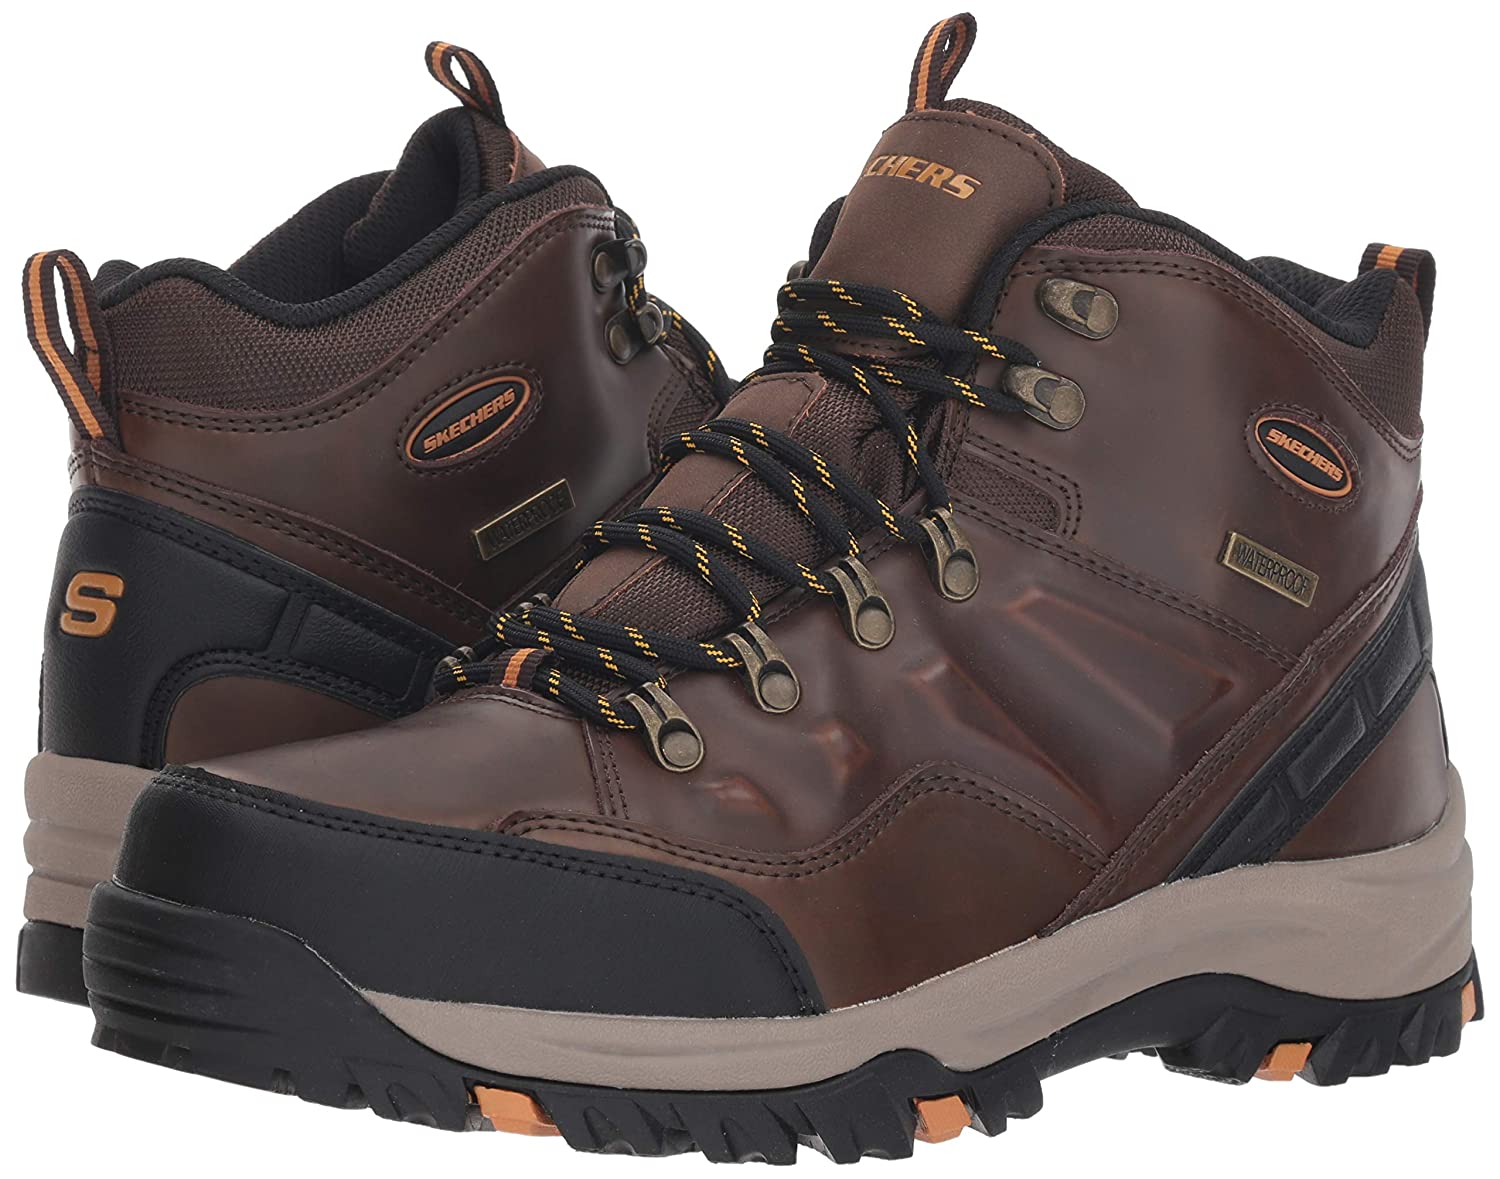 Skechers Men's Relment-Traven Hiking Boot, Dkbr, Size 12.0 ...